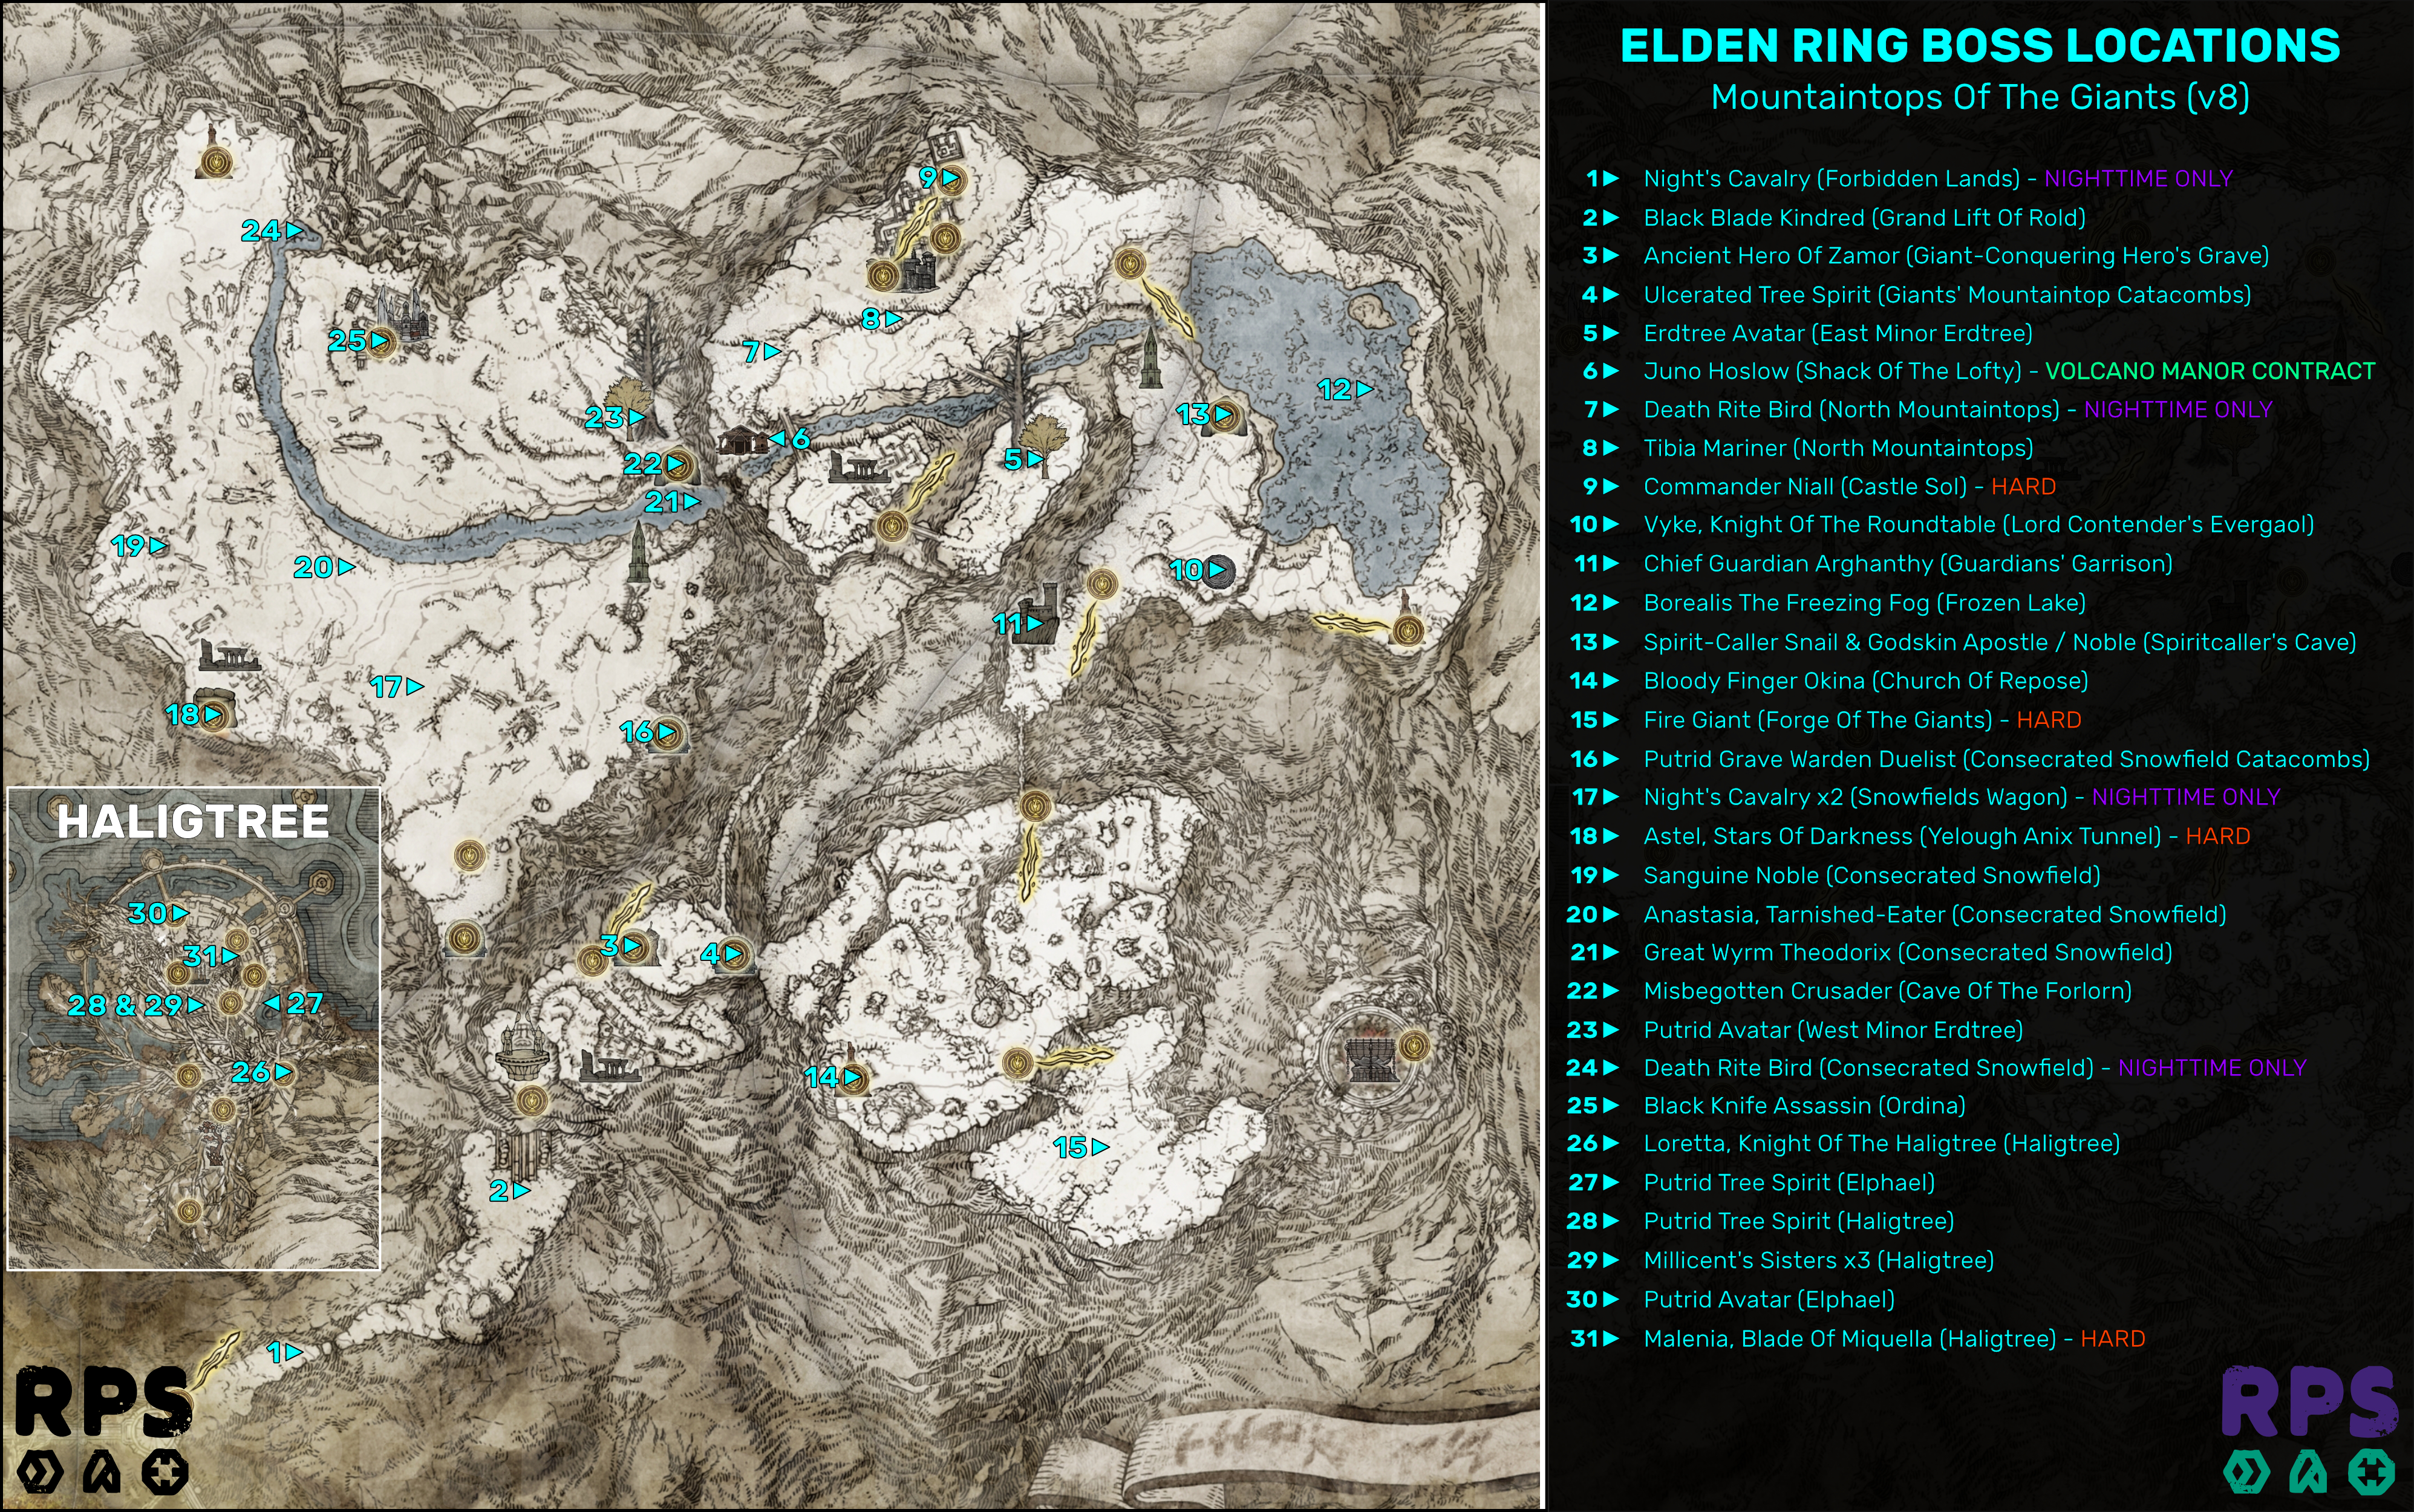 Tibia Mariner Boss Fight (No Damage) - Altus Plateau [Elden Ring